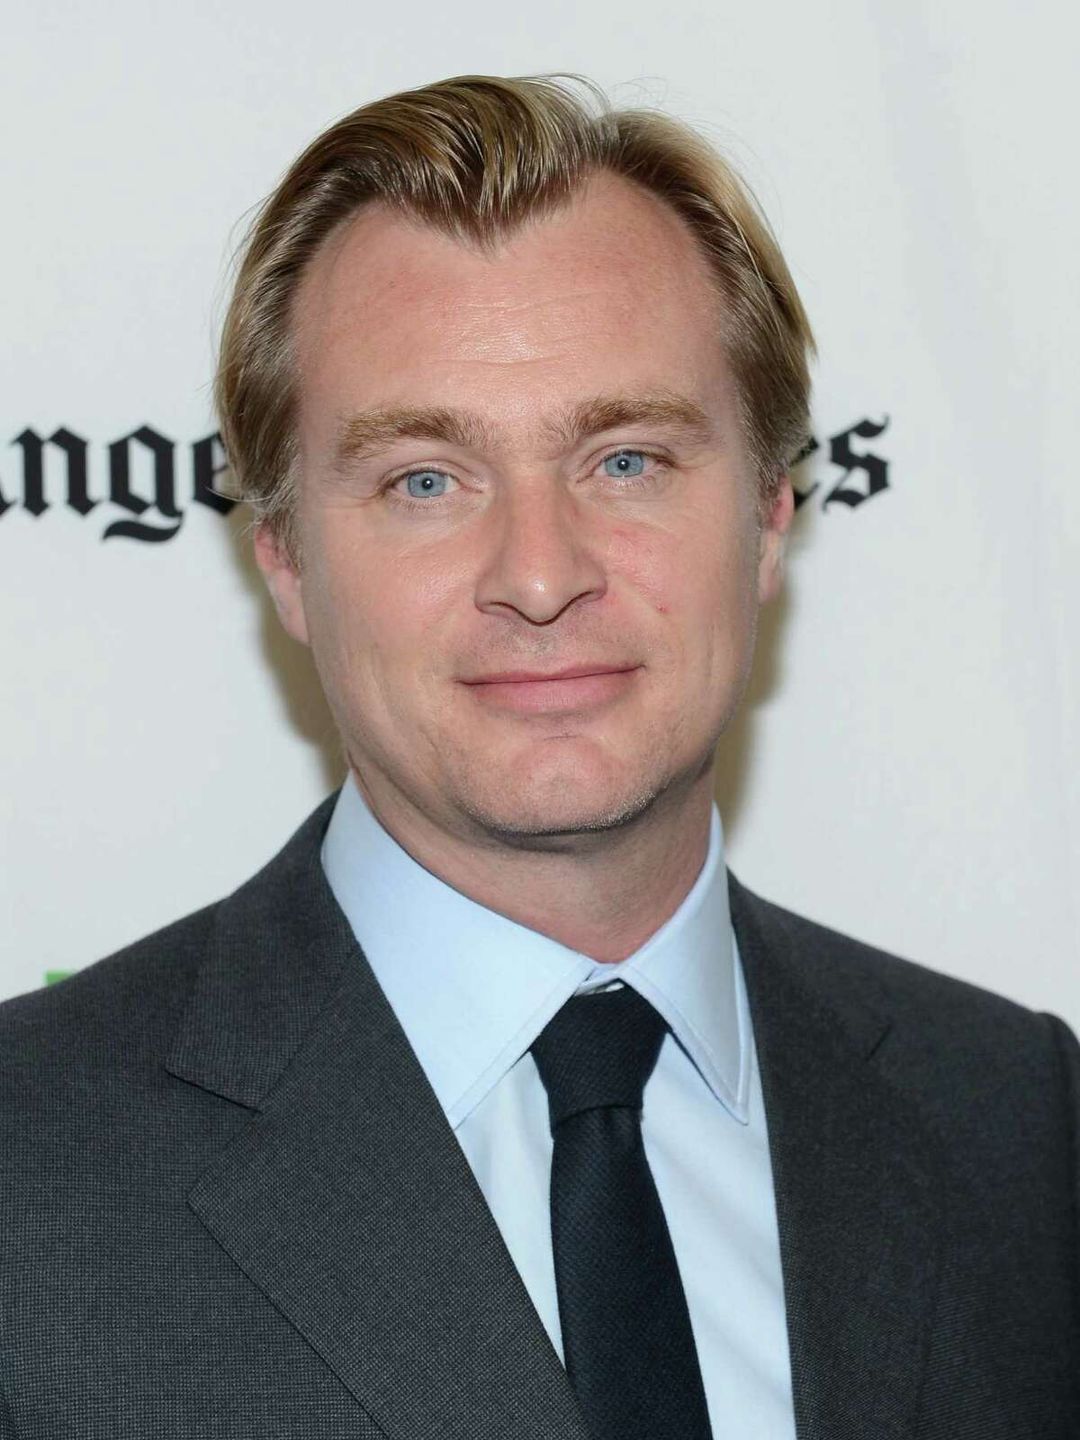 Christopher Nolan upbringing